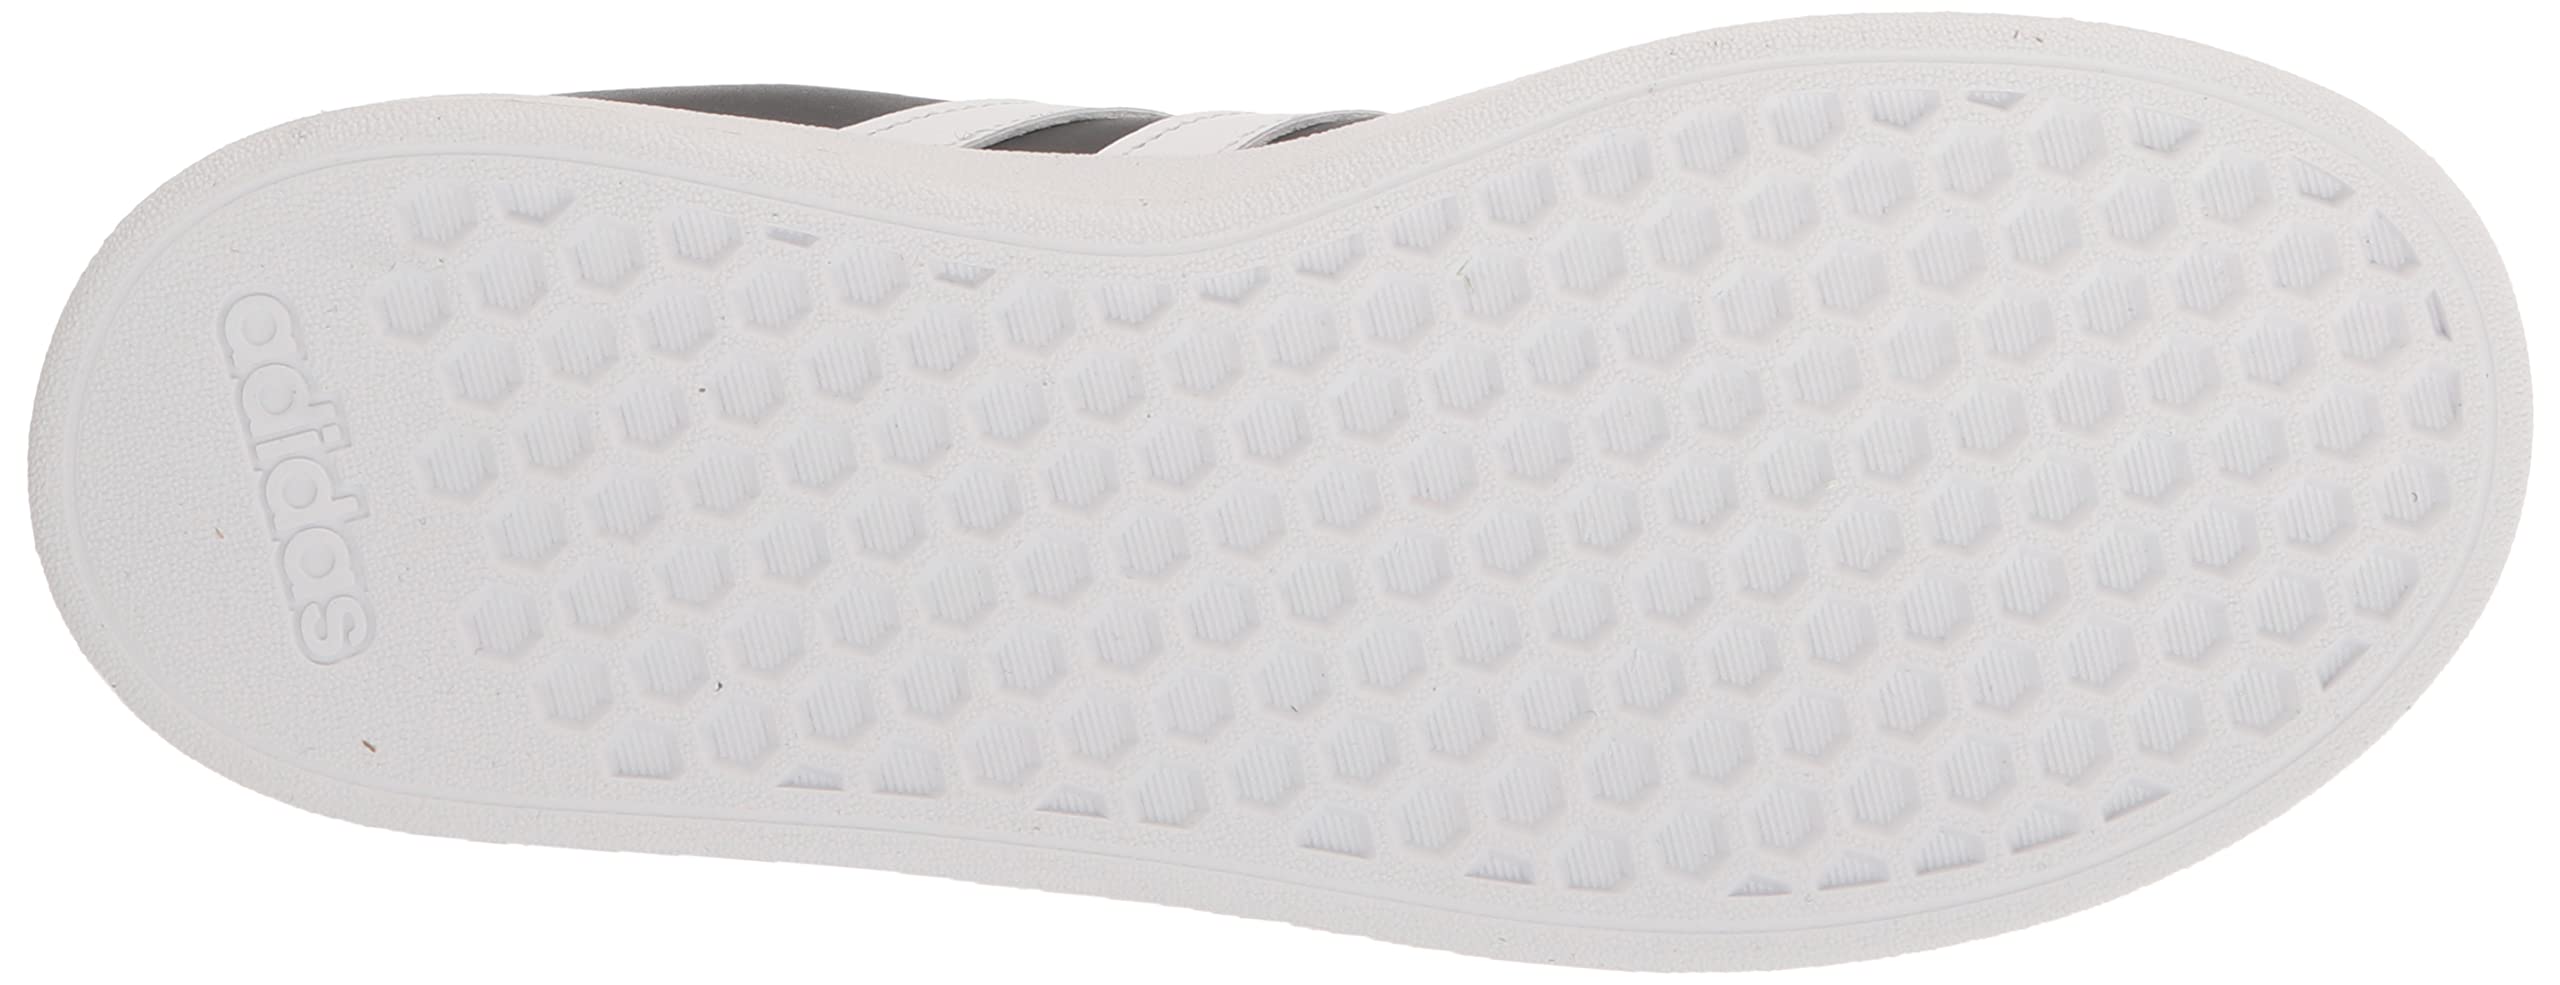 adidas Unisex-Child Grand Court 2.0 Tennis Shoe